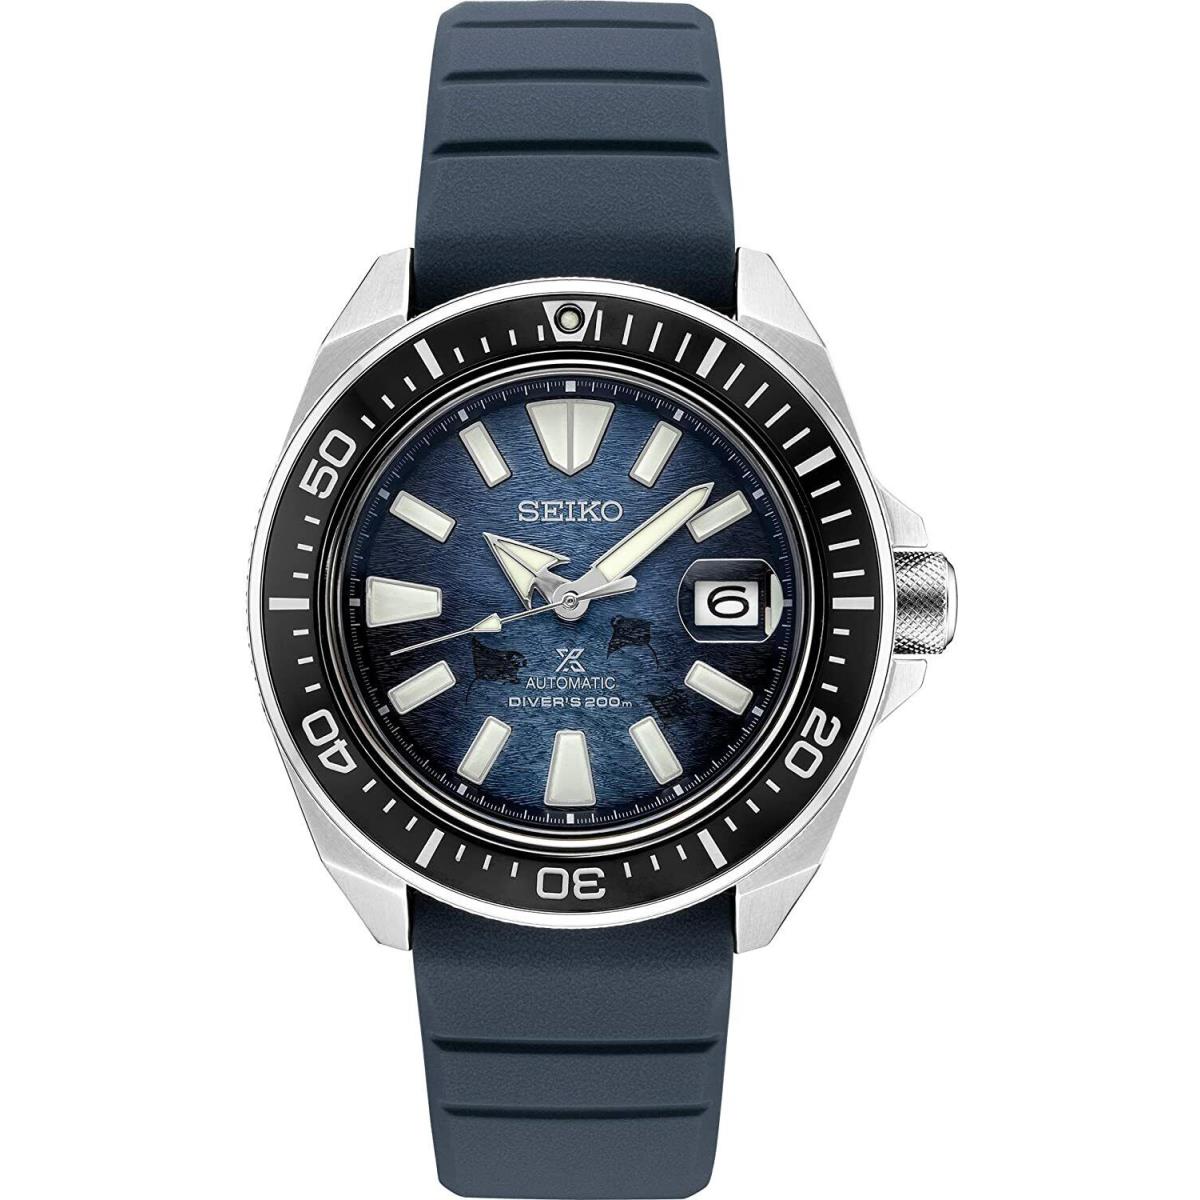 Seiko Prospex Automatic Diver s Blue Silicone Strap Men s Watch SRPF79 - Dial: Blue, Band: Blue